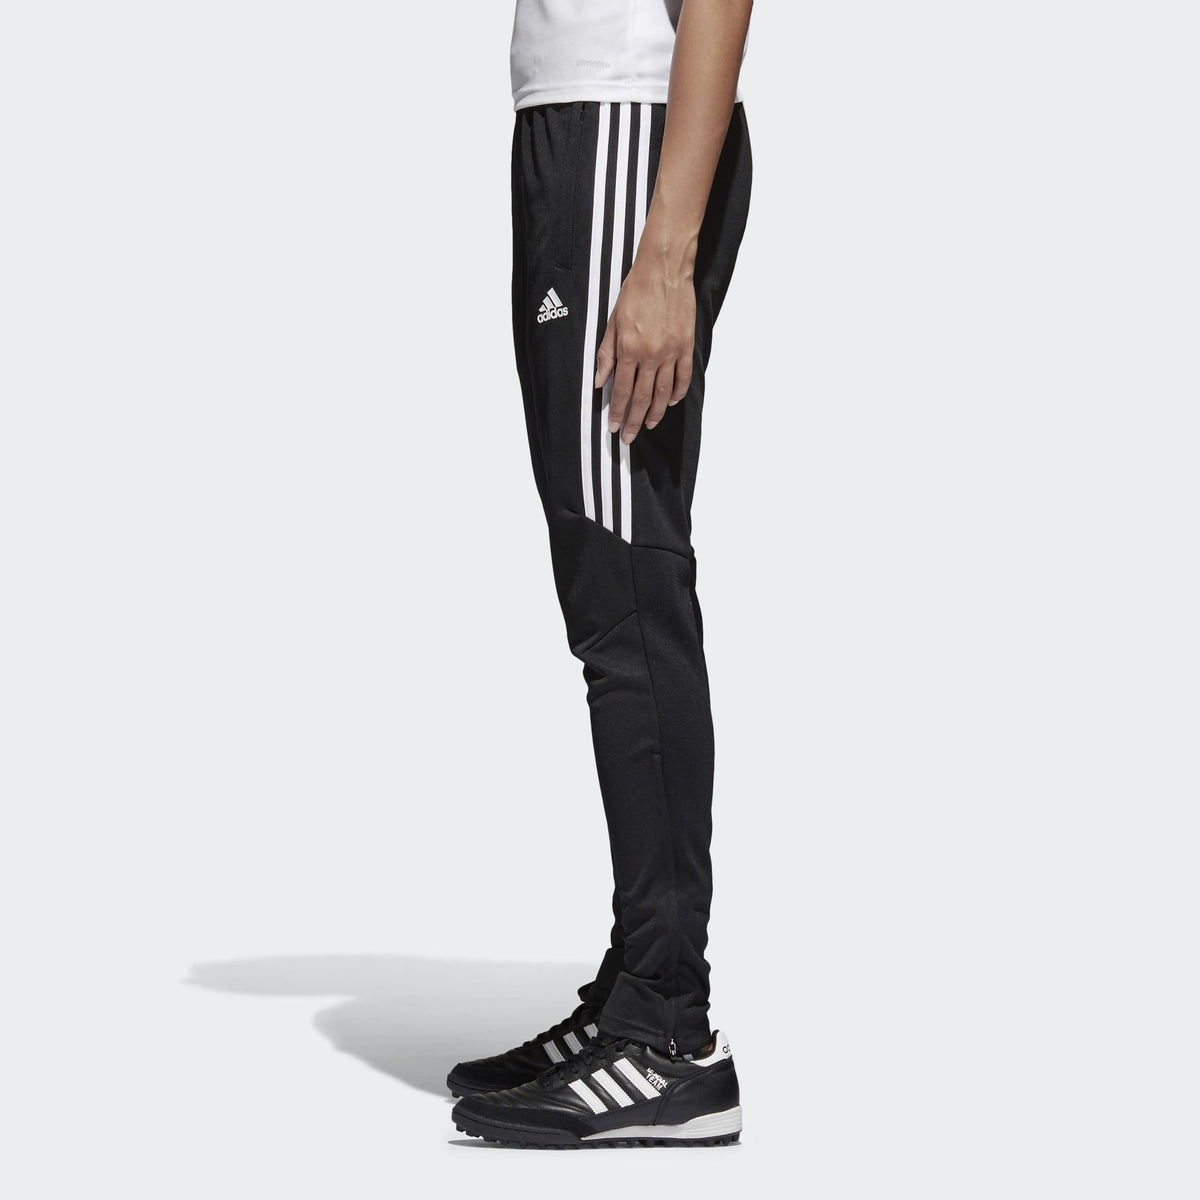  adidas Women's Tiro 17 Training Pants, Black/Black, X-Small :  Clothing, Shoes & Jewelry